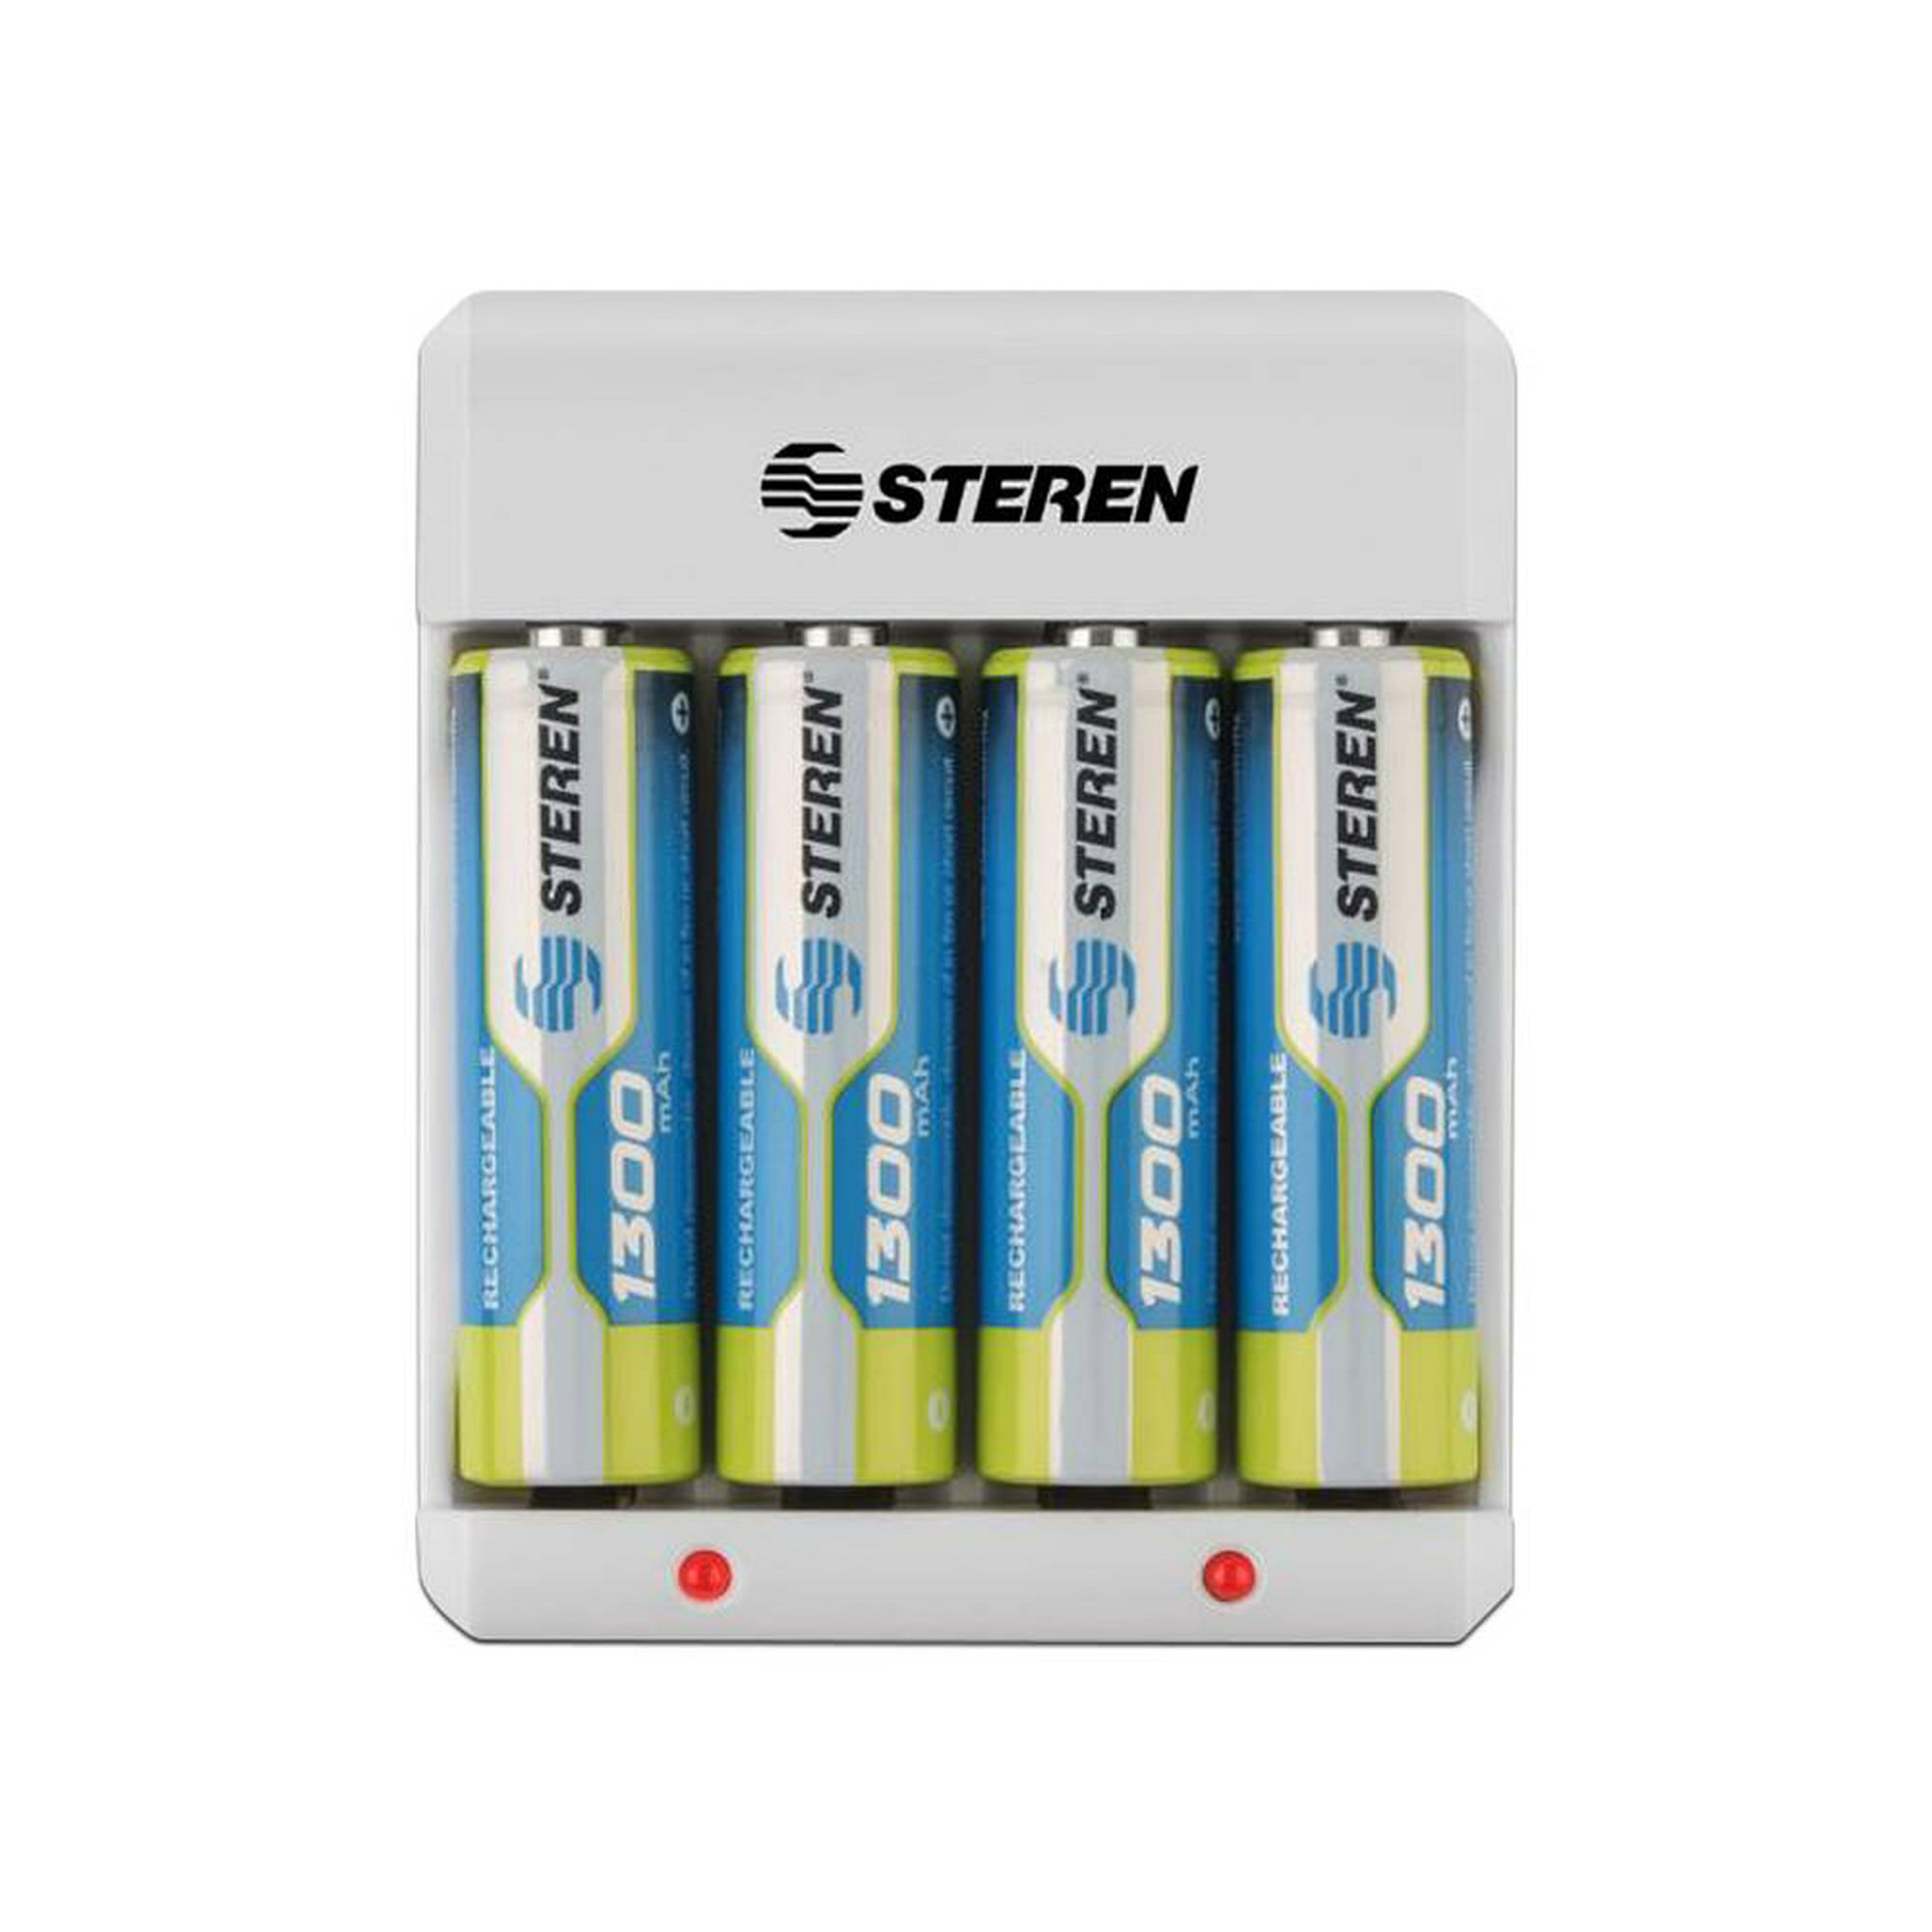 Energizer Pilas AAA recargables y cargador de batería recargable AA y AAA  con 4 pilas recargables AA NiMH, 12 unidades